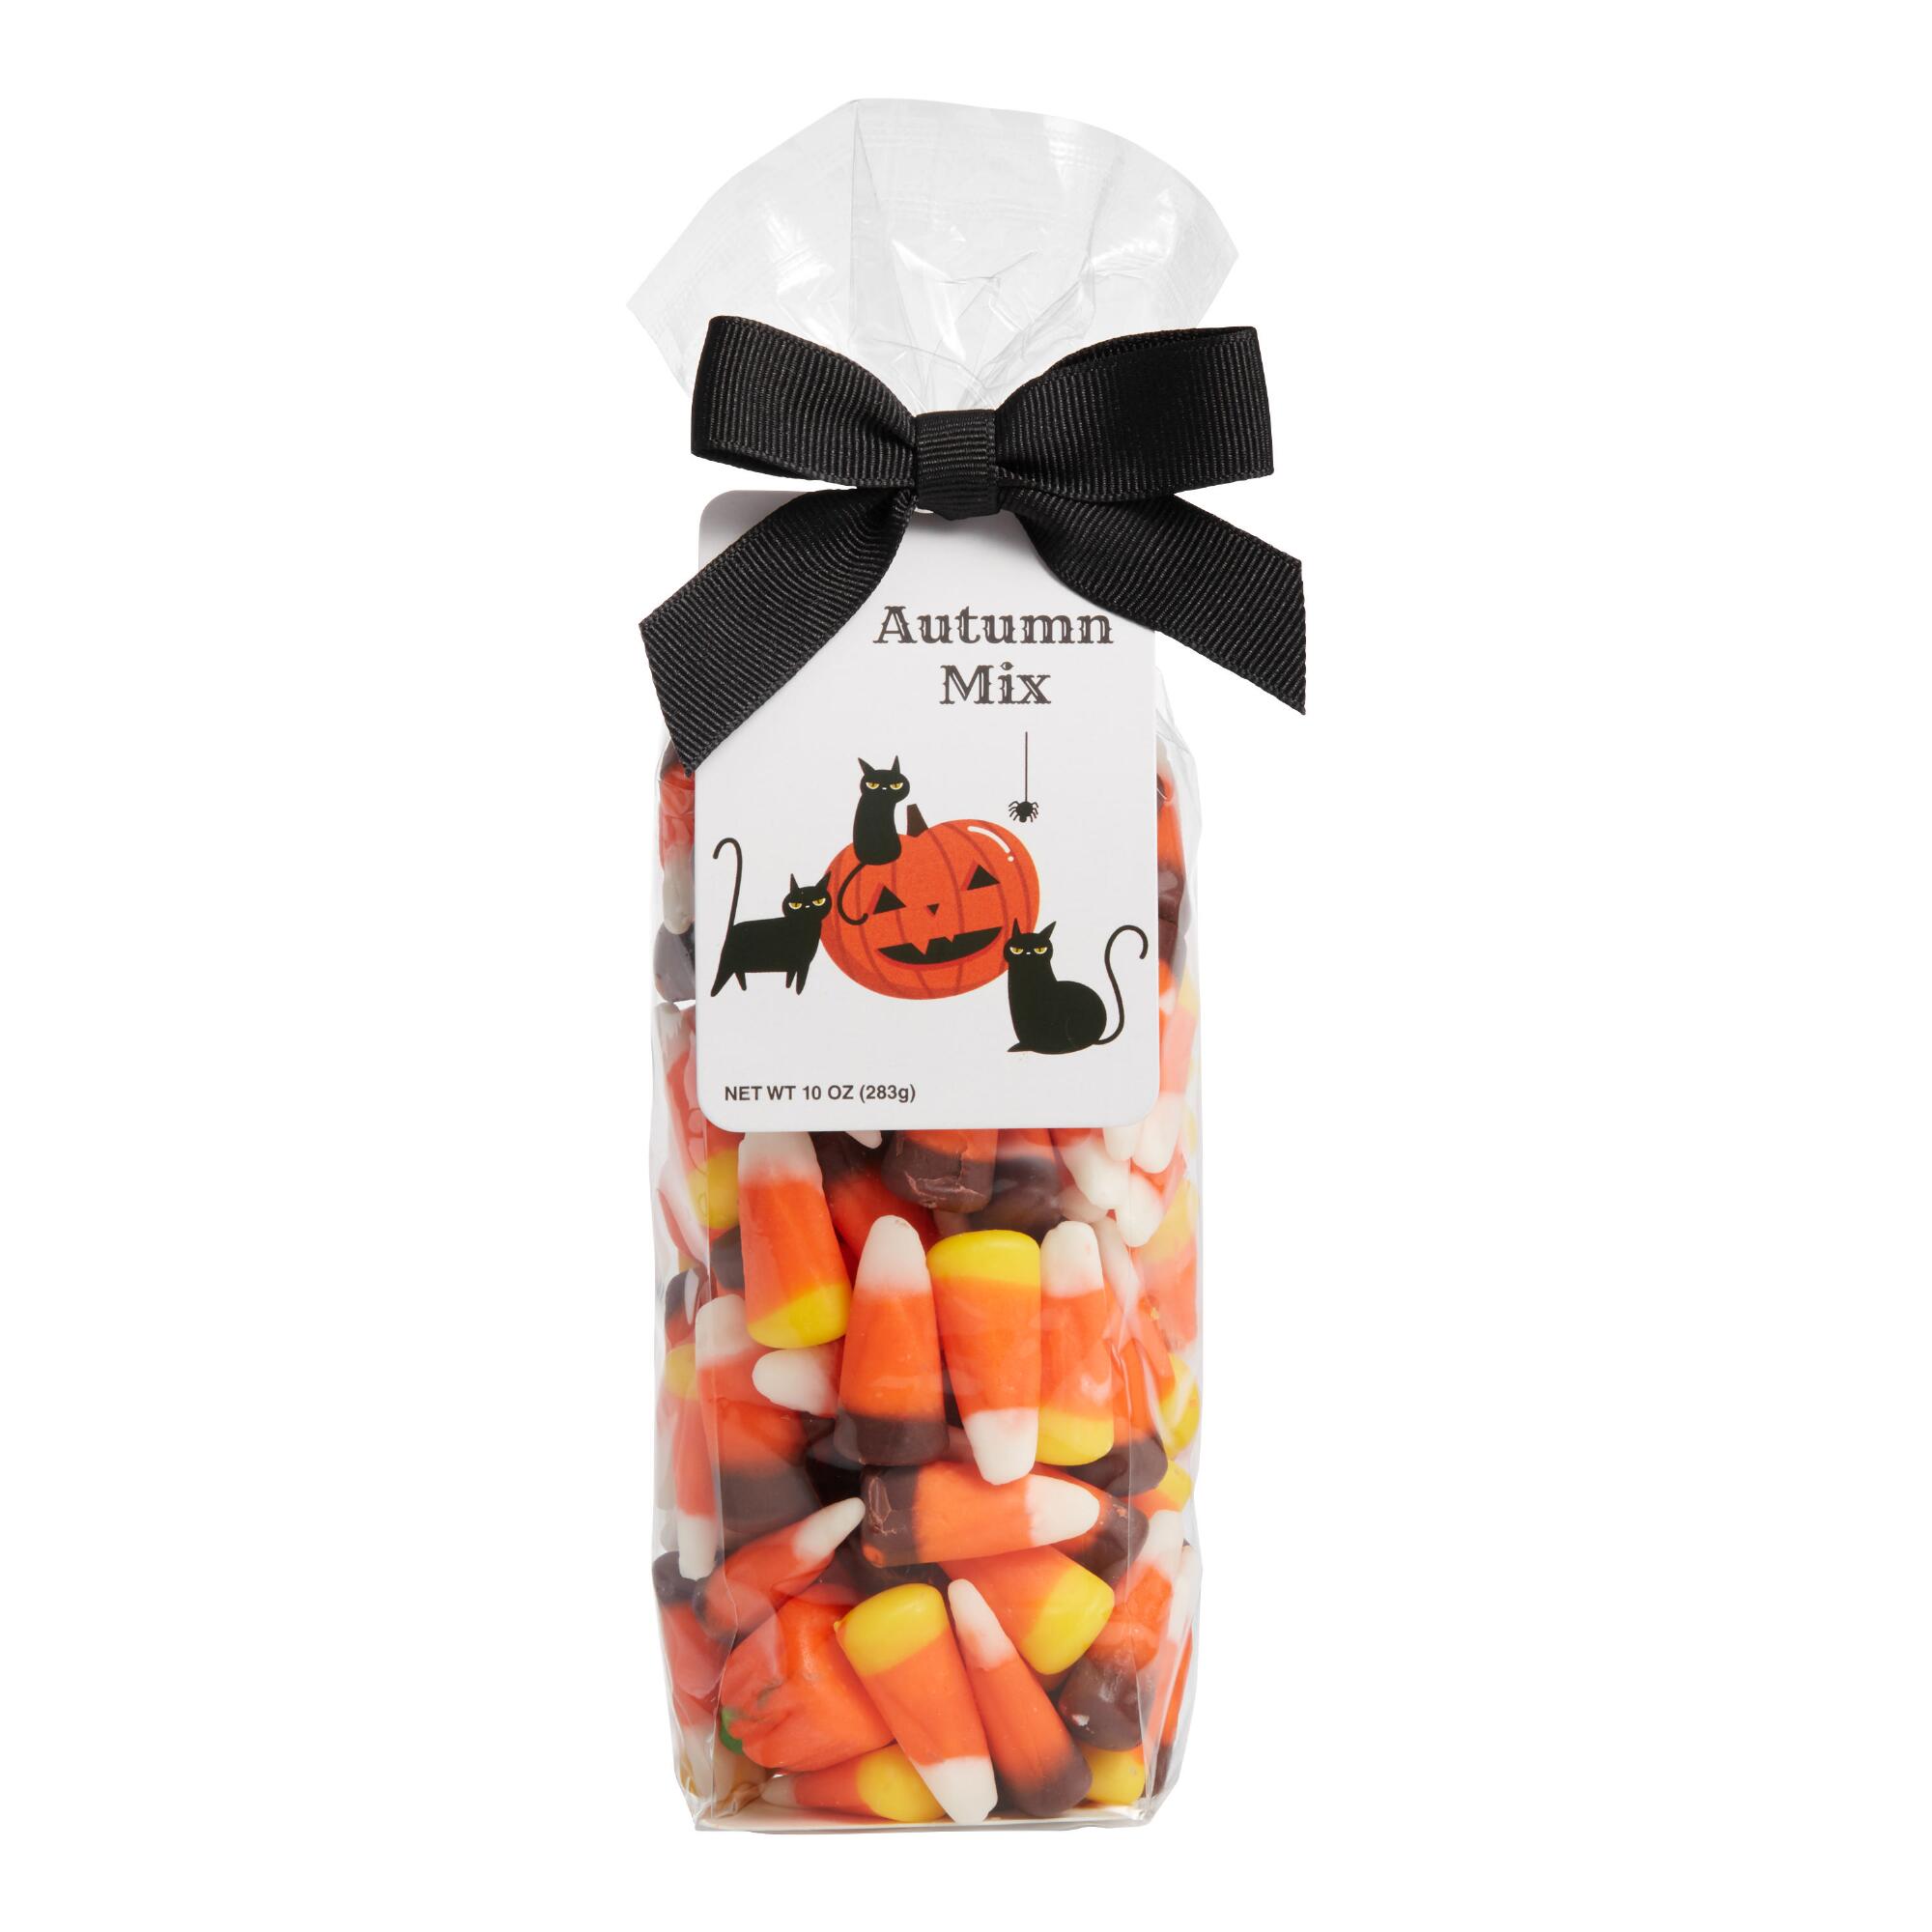 Autumn Mix Candy Corn Bag by World Market